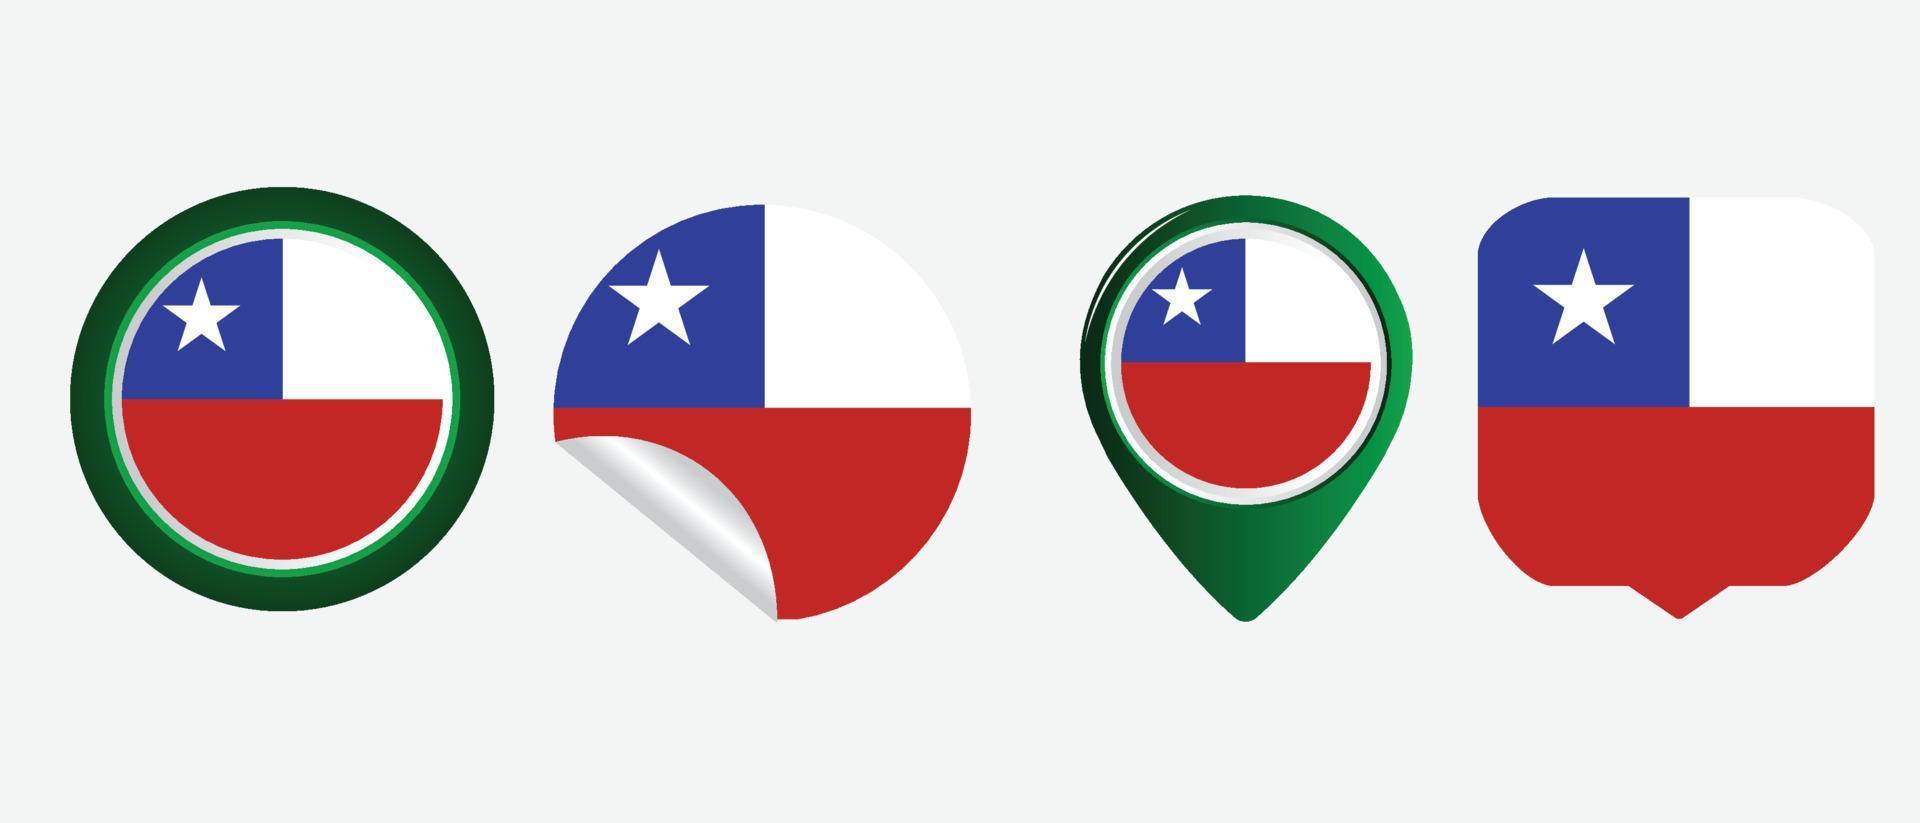 vlag van chili. platte pictogram symbool vectorillustratie vector